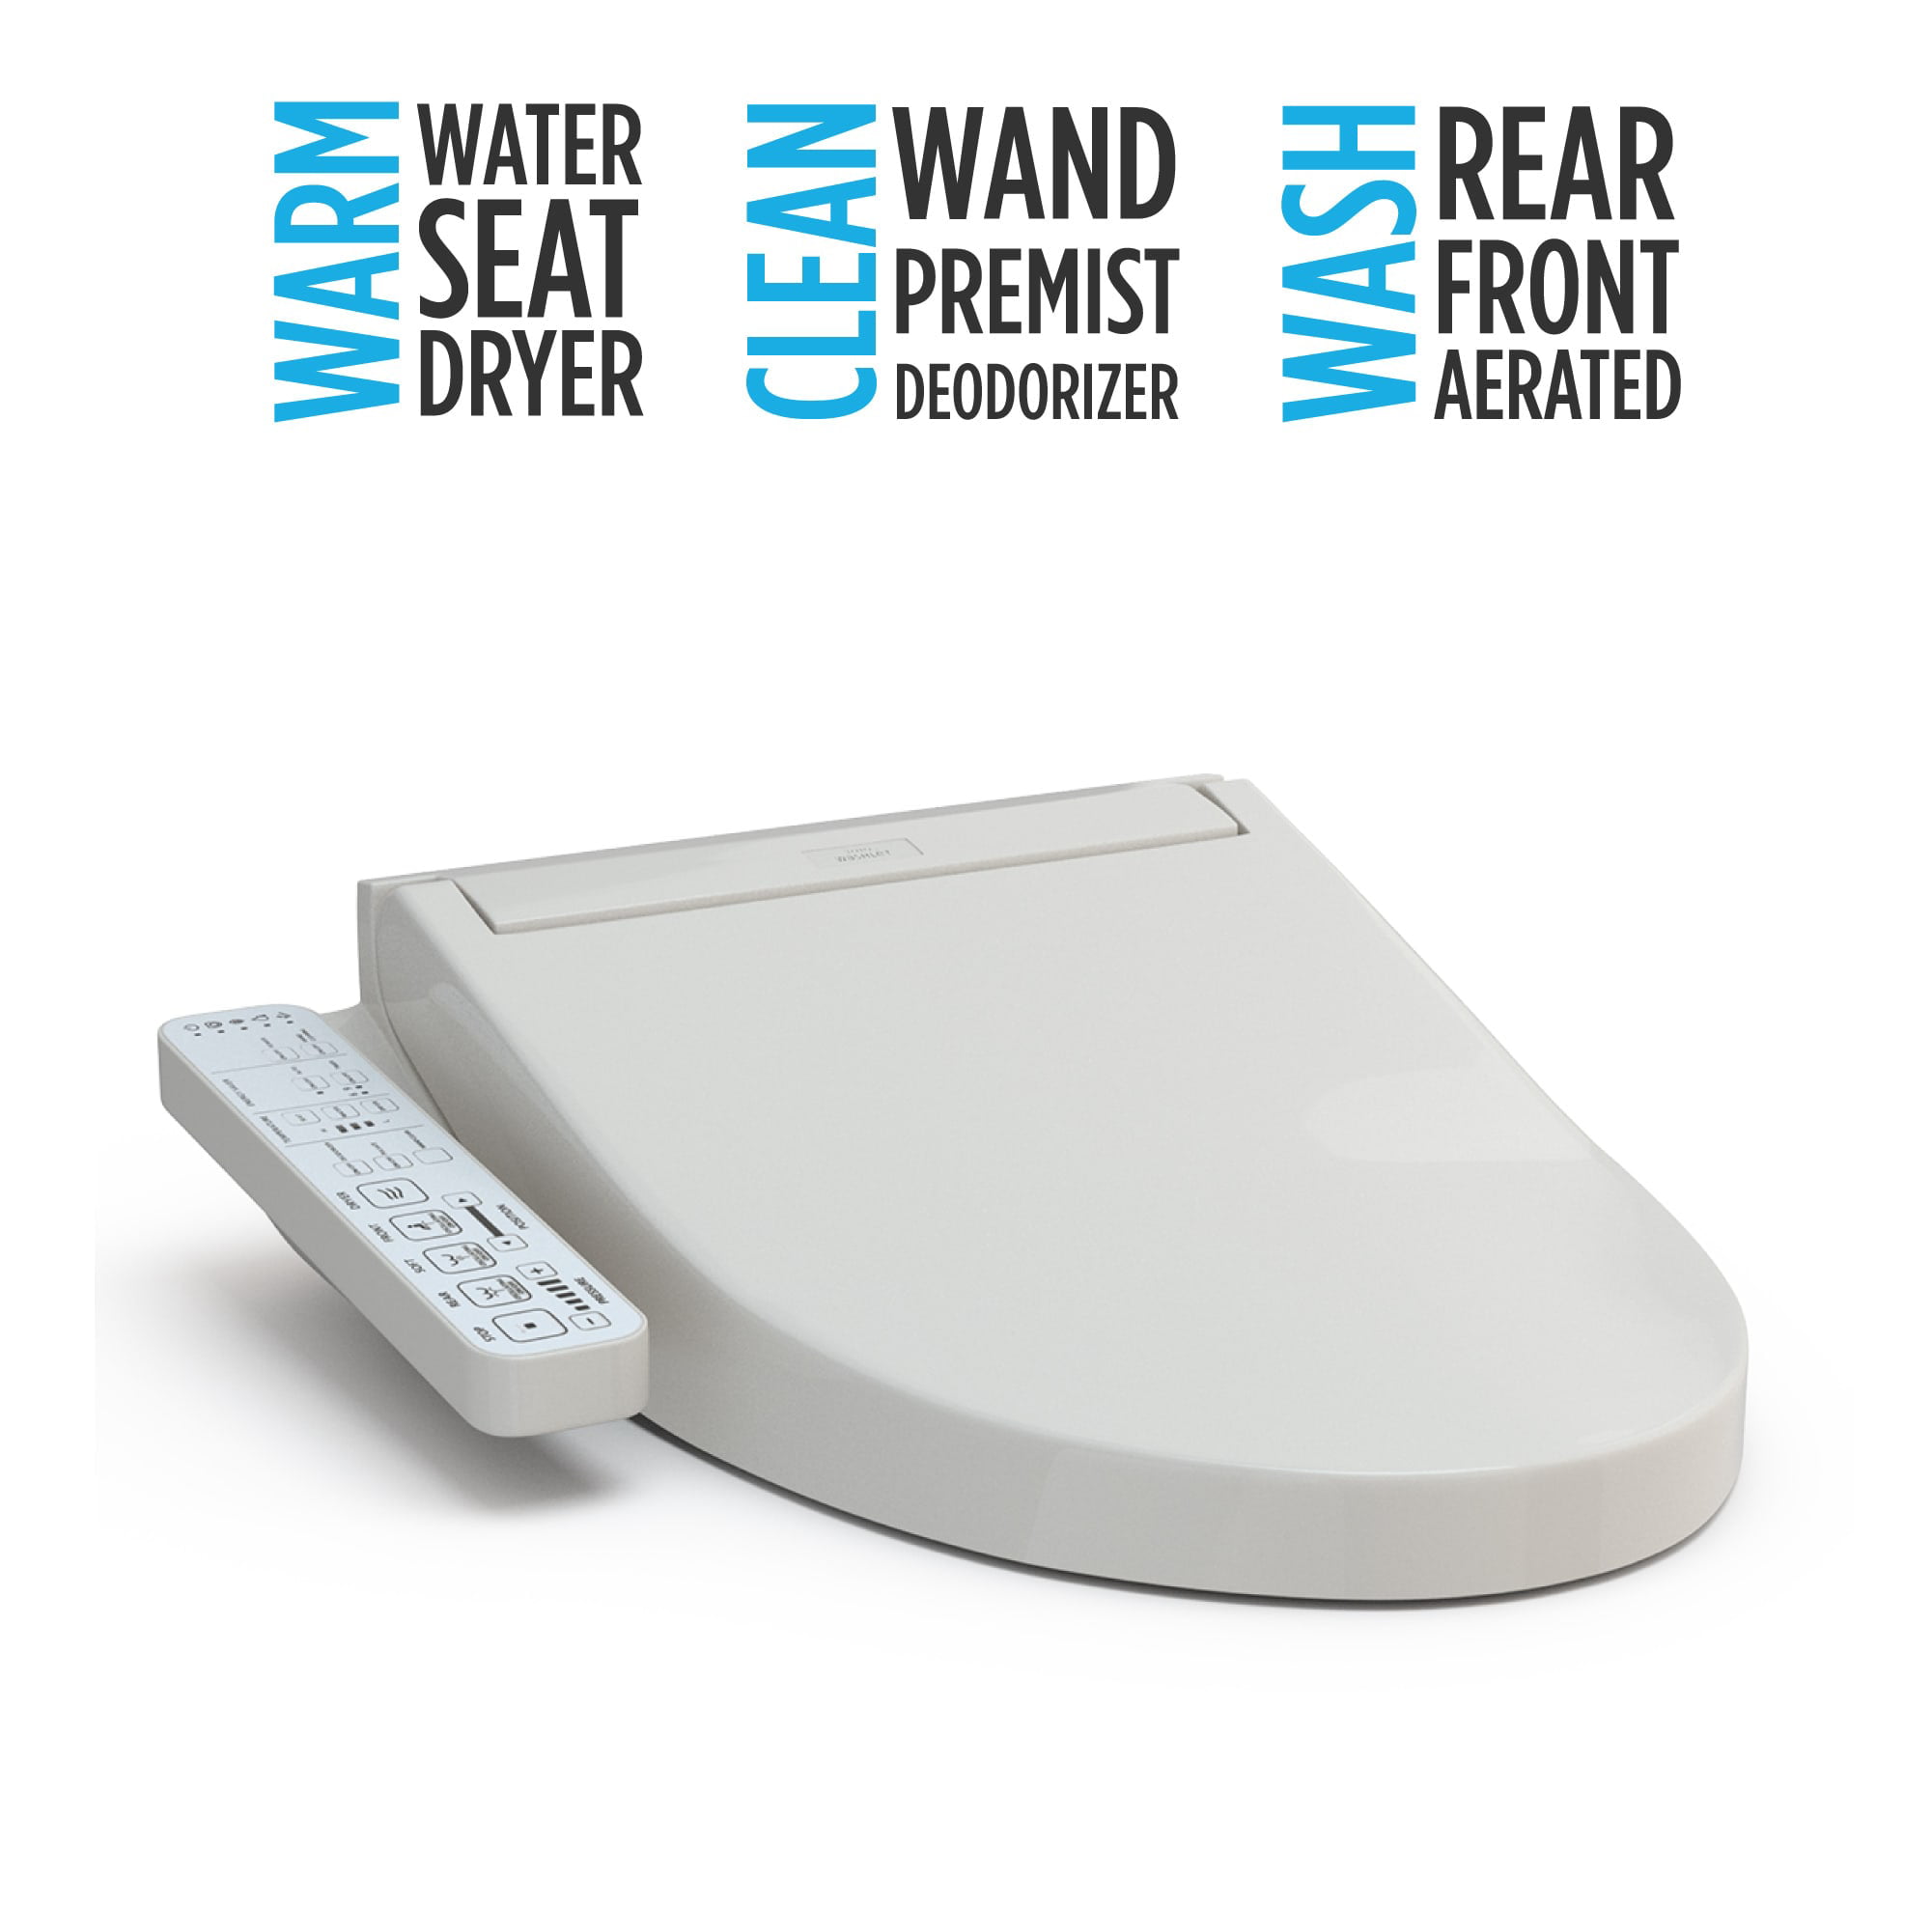 TOTO SW3074#12 WASHLET C2 Electronic Bidet Toilet Seat with PREMIST and EWATER Sedona Beige Elongated Wand Cleaning